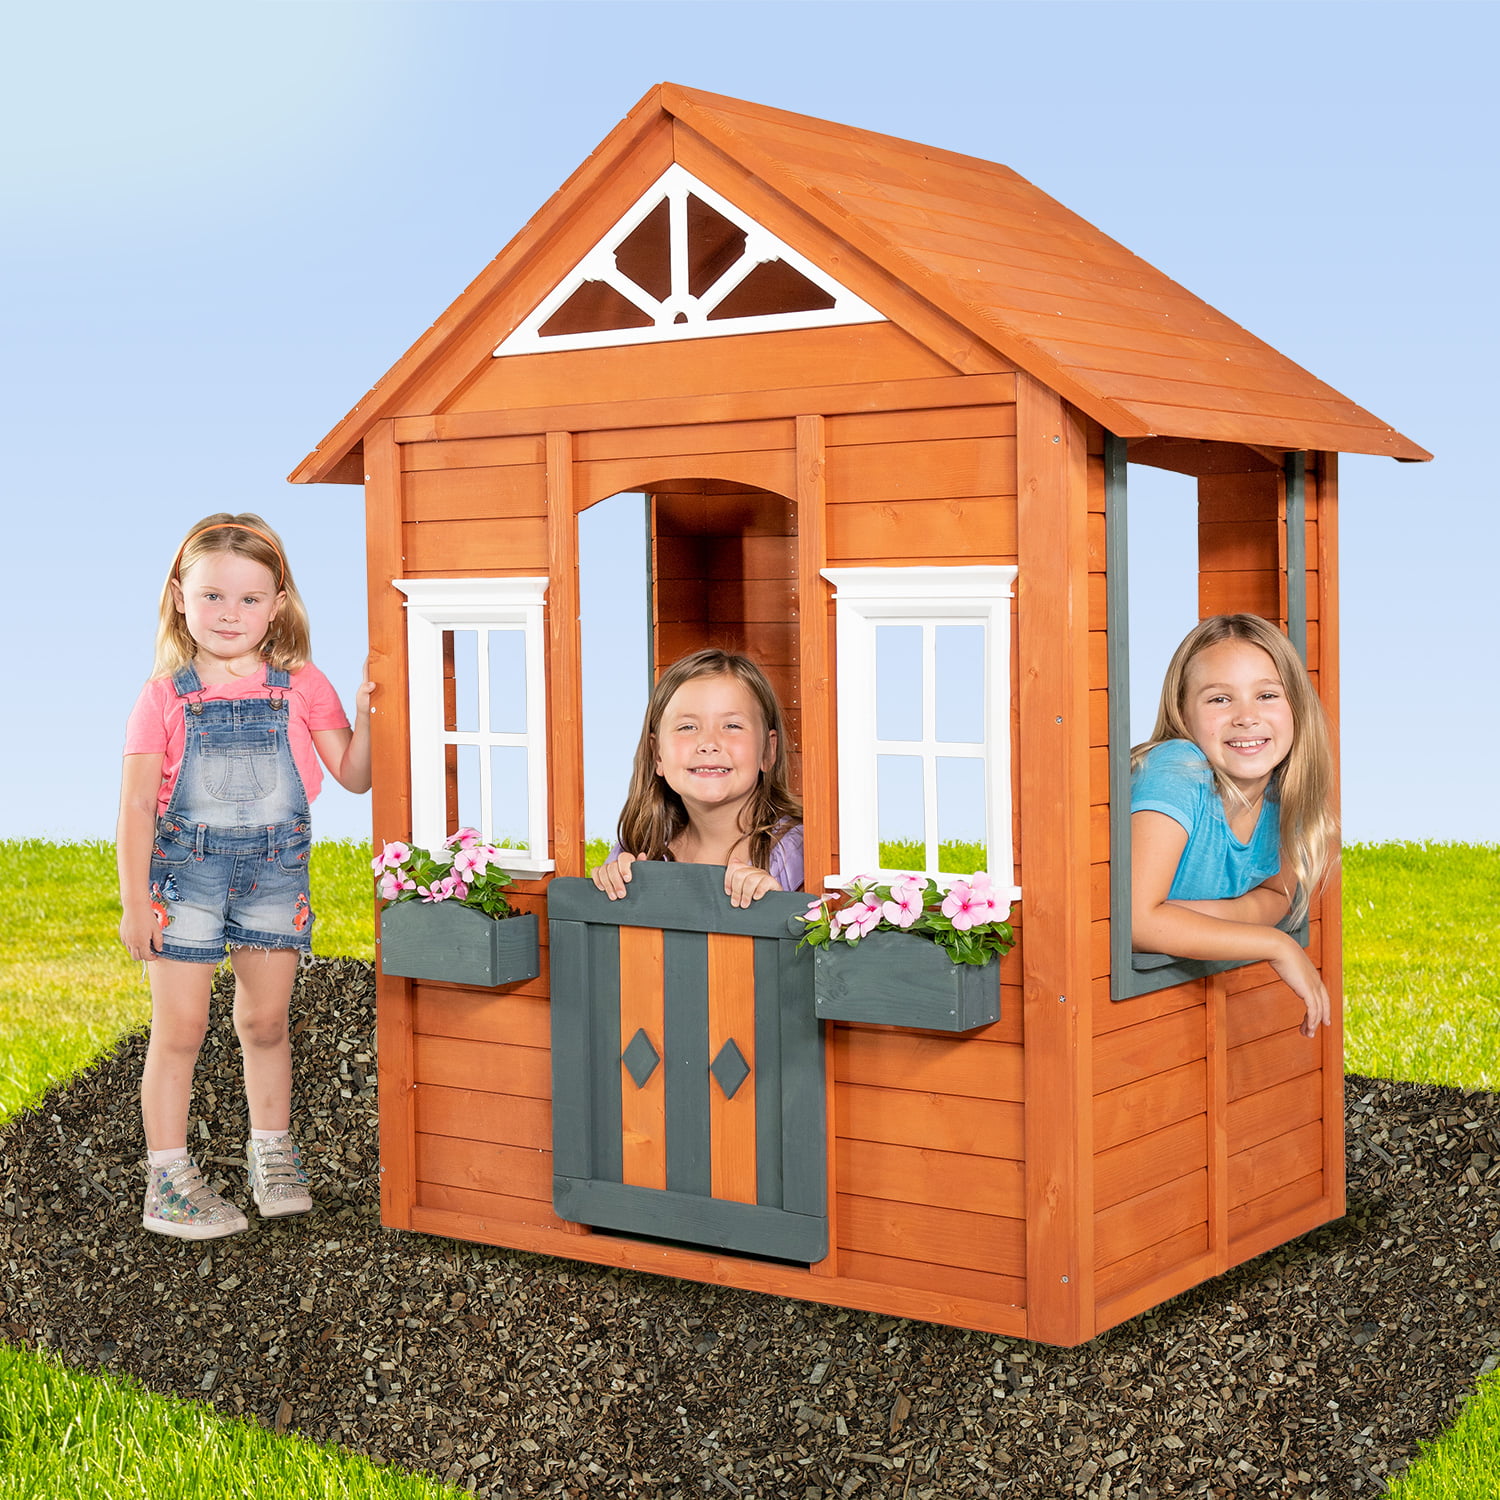 Wooden Play House Backyard Discovery Timberlake Cedar Kids Cottage Outdoor Fun 